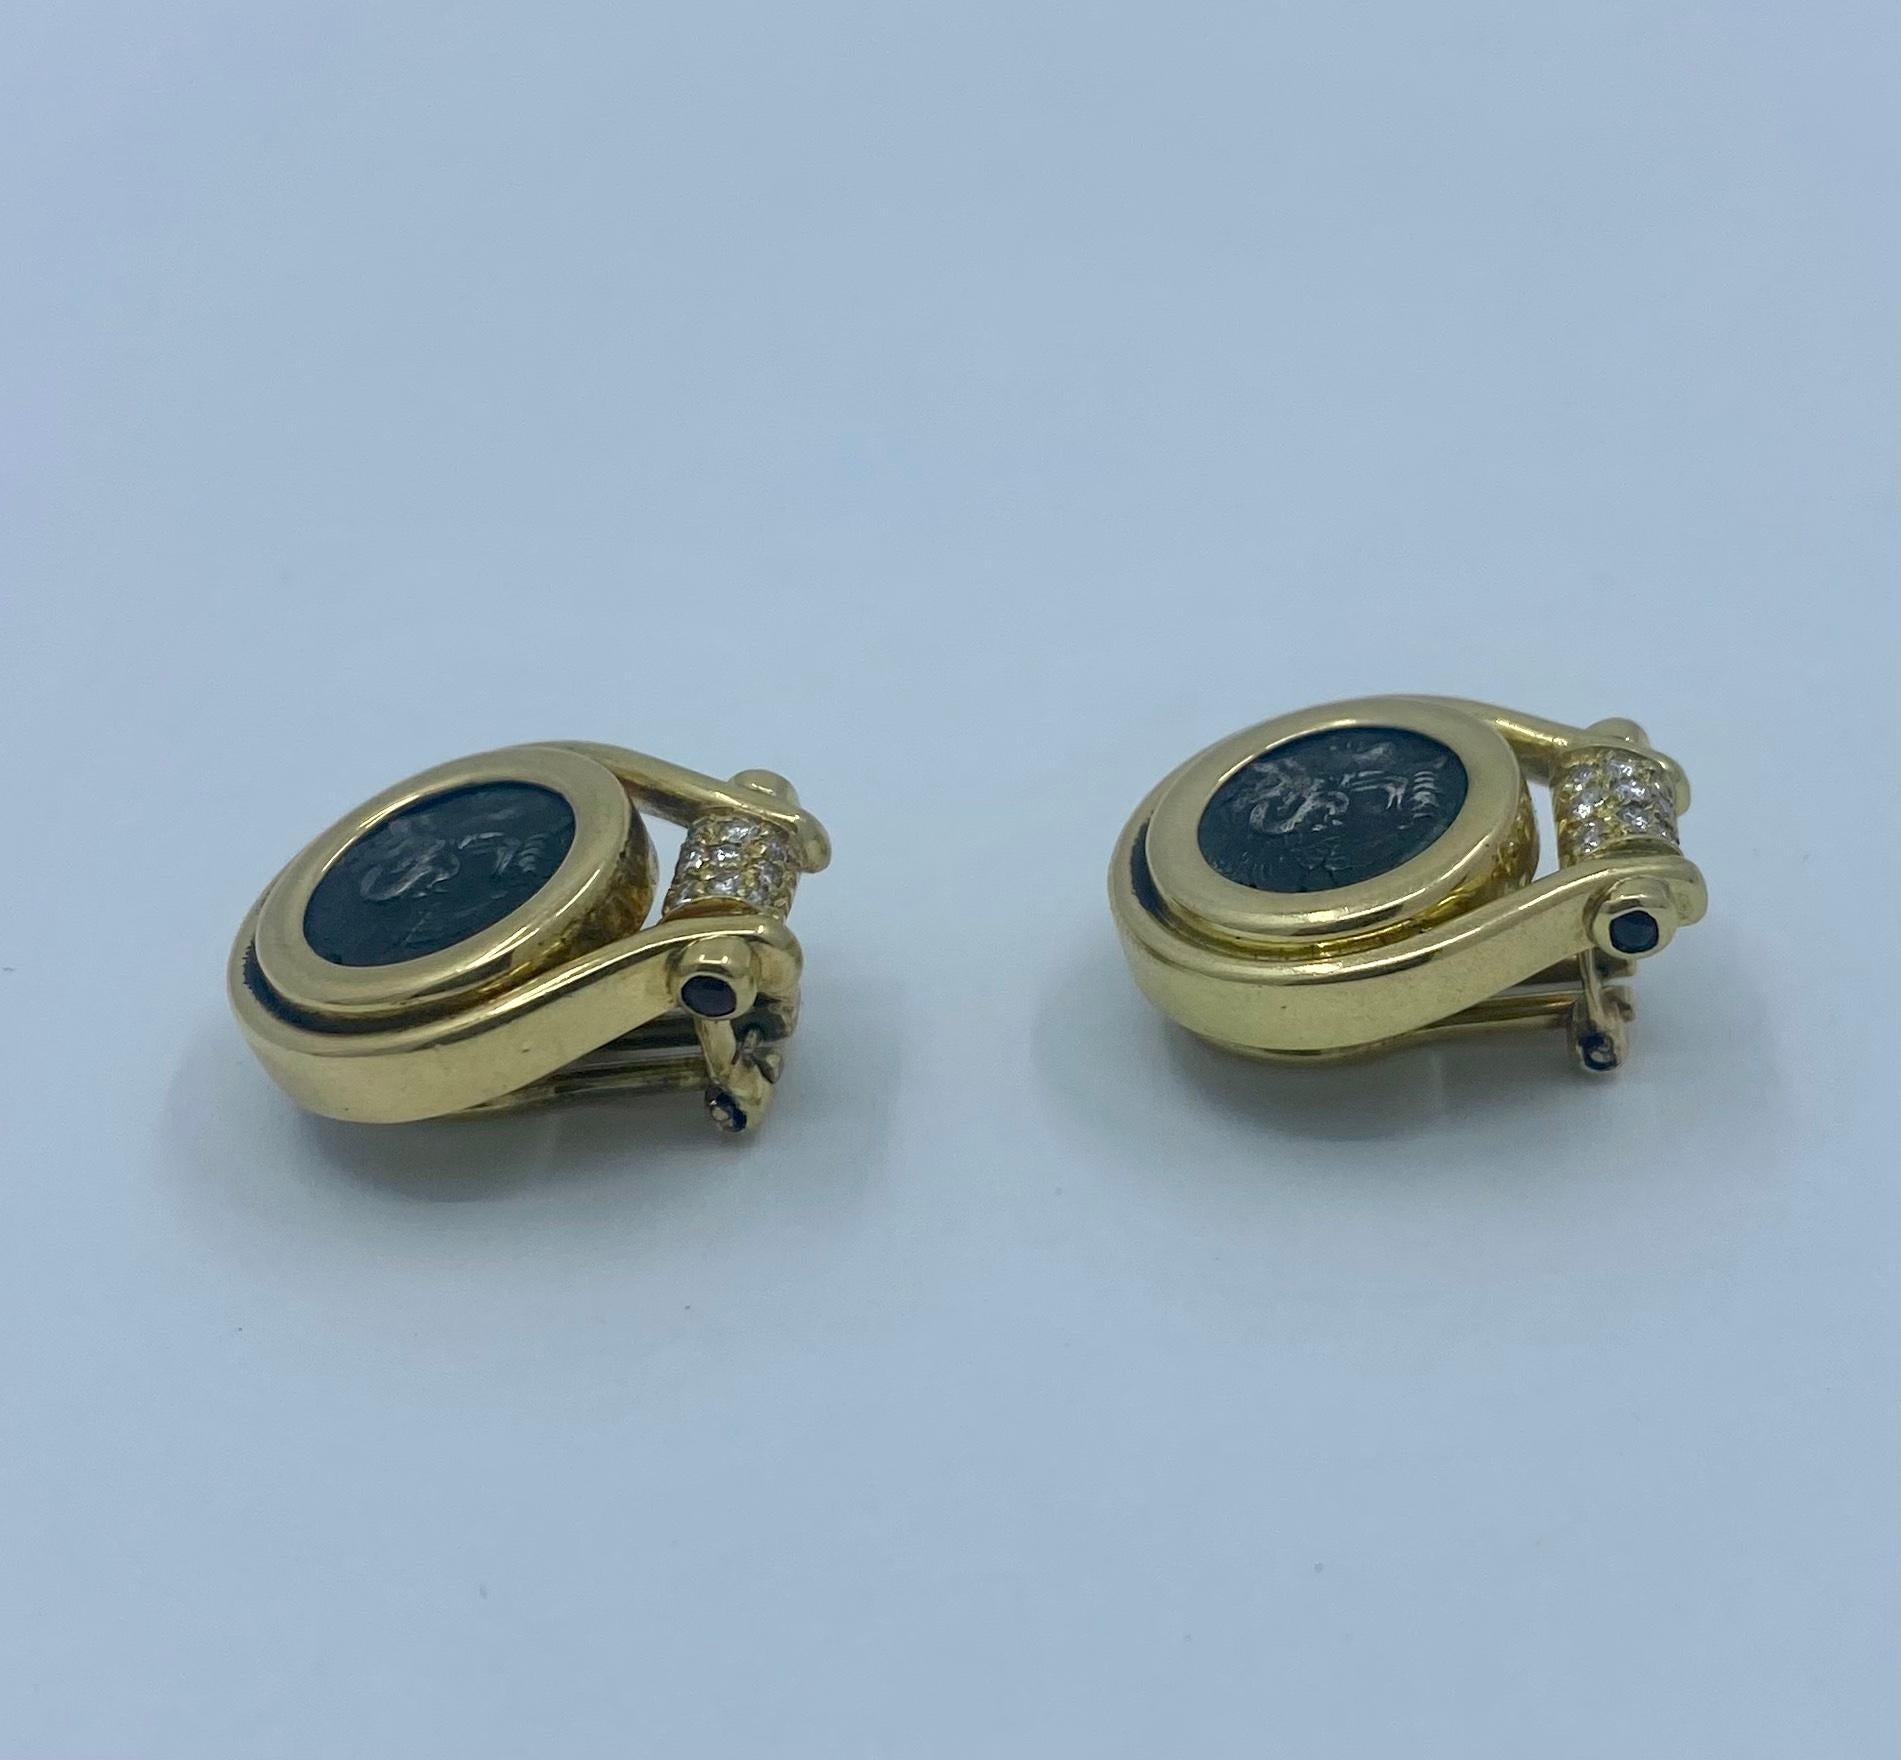 Designer: Buldari
Materials: 18 karat Yellow Gold
Gemstone: 0.2 cts.  round brilliant cut diamond
Weight: 18.8 grams
Measurement: 3/4